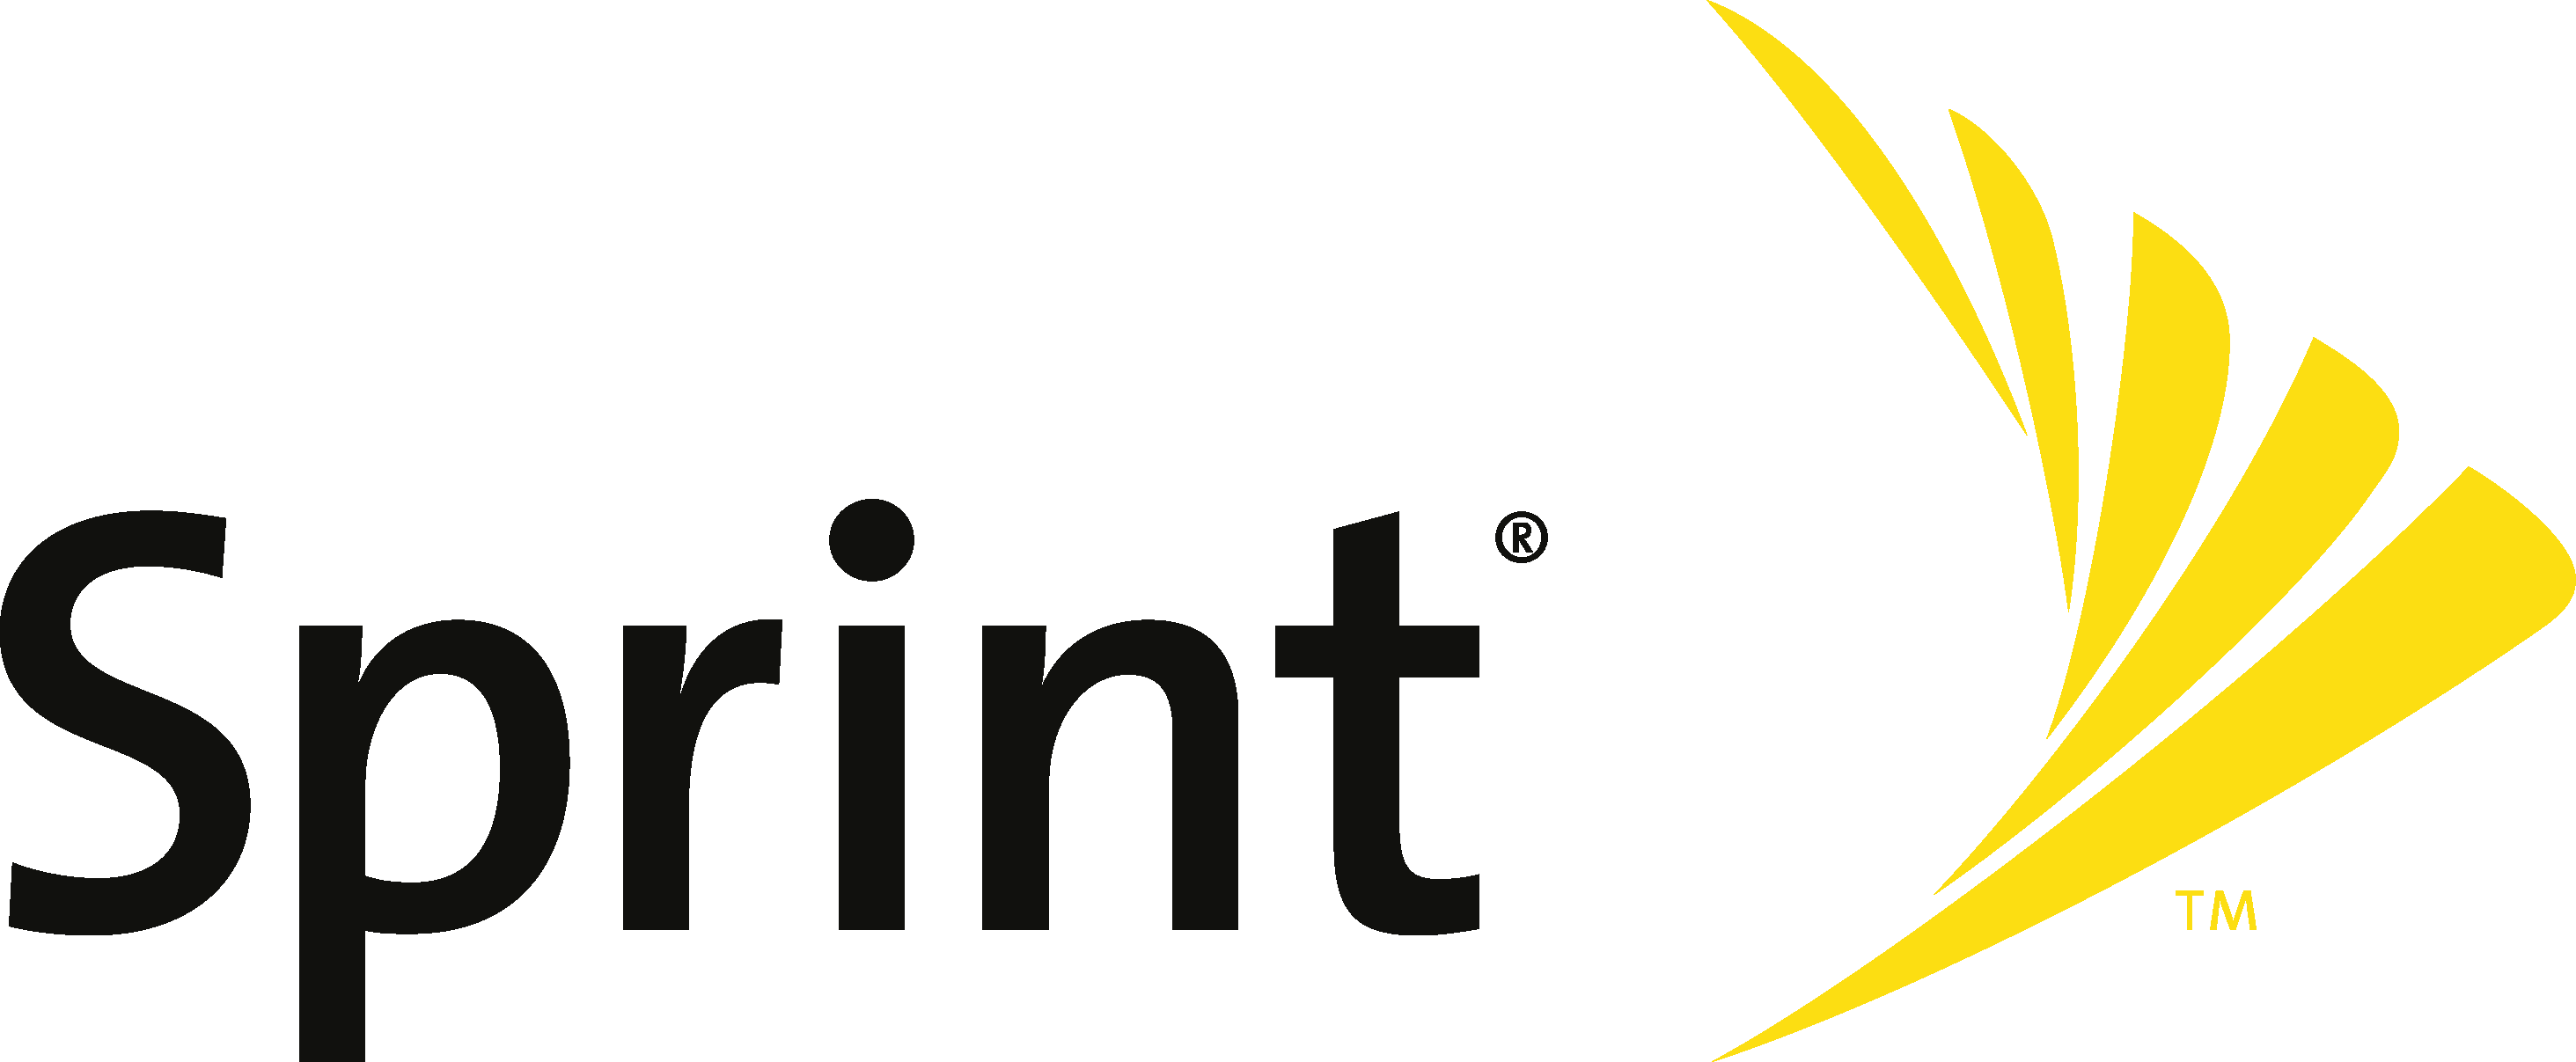 Sprint Logo png